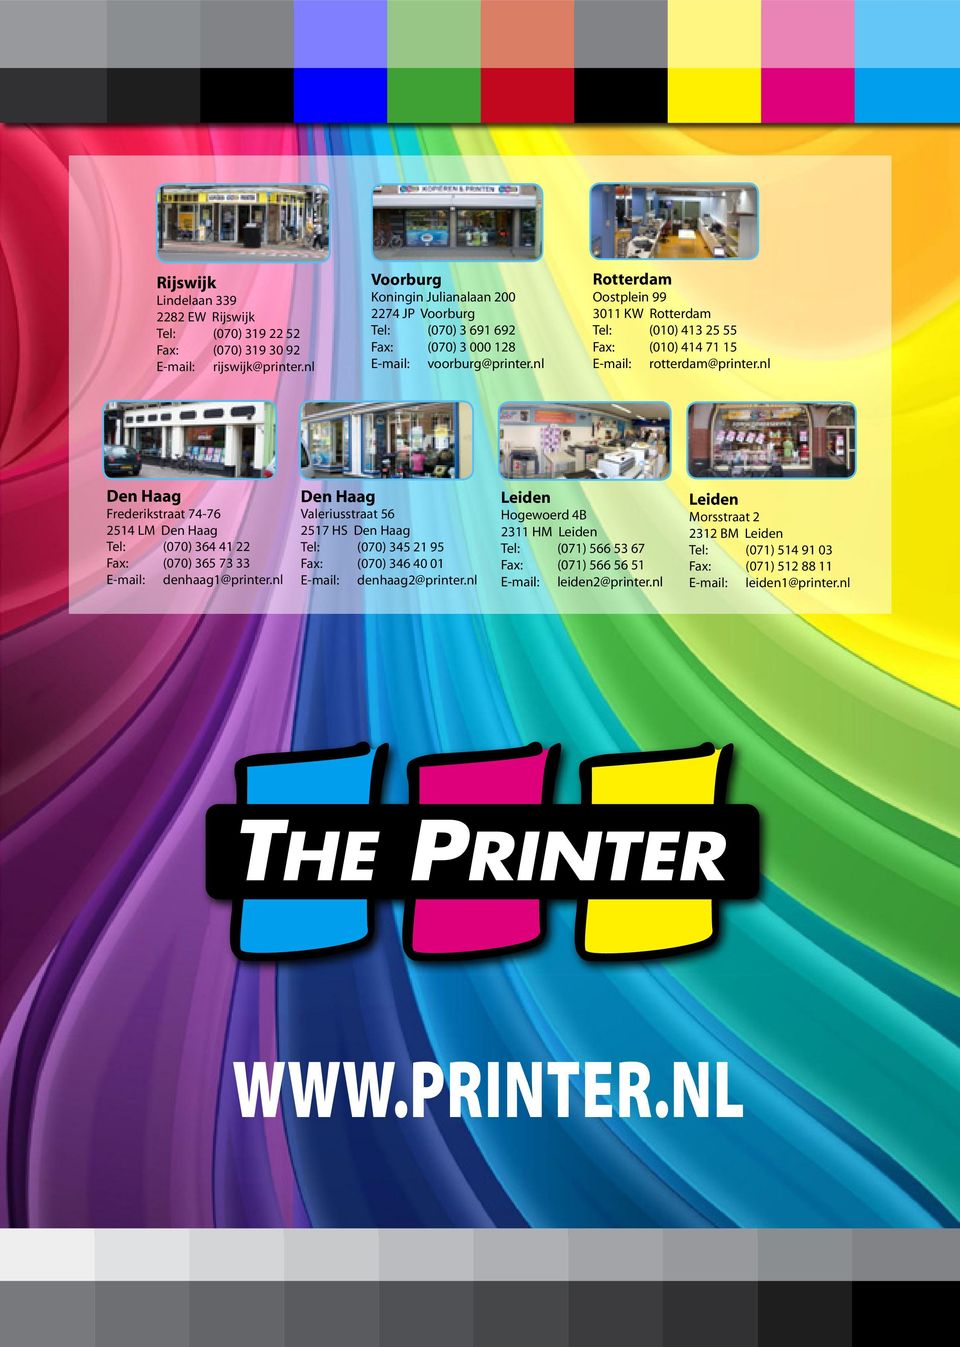 nl Rotterdam Oostplein 99 30 KW Rotterdam Tel: (00) 43 2 Fax: (00) 44 7 Email: rotterdam@printer.